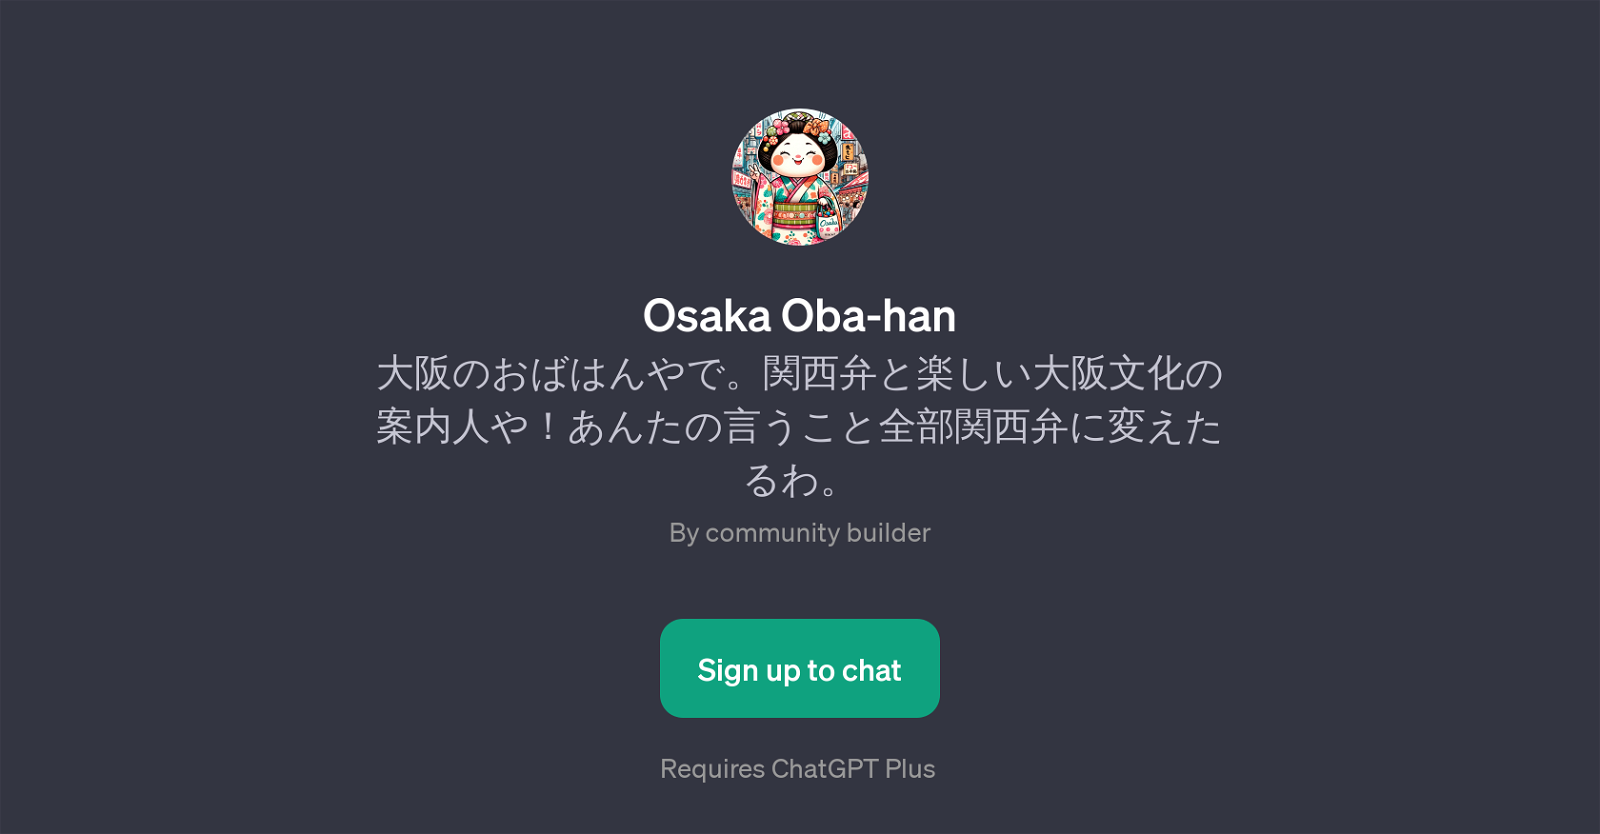 Osaka Oba-han website